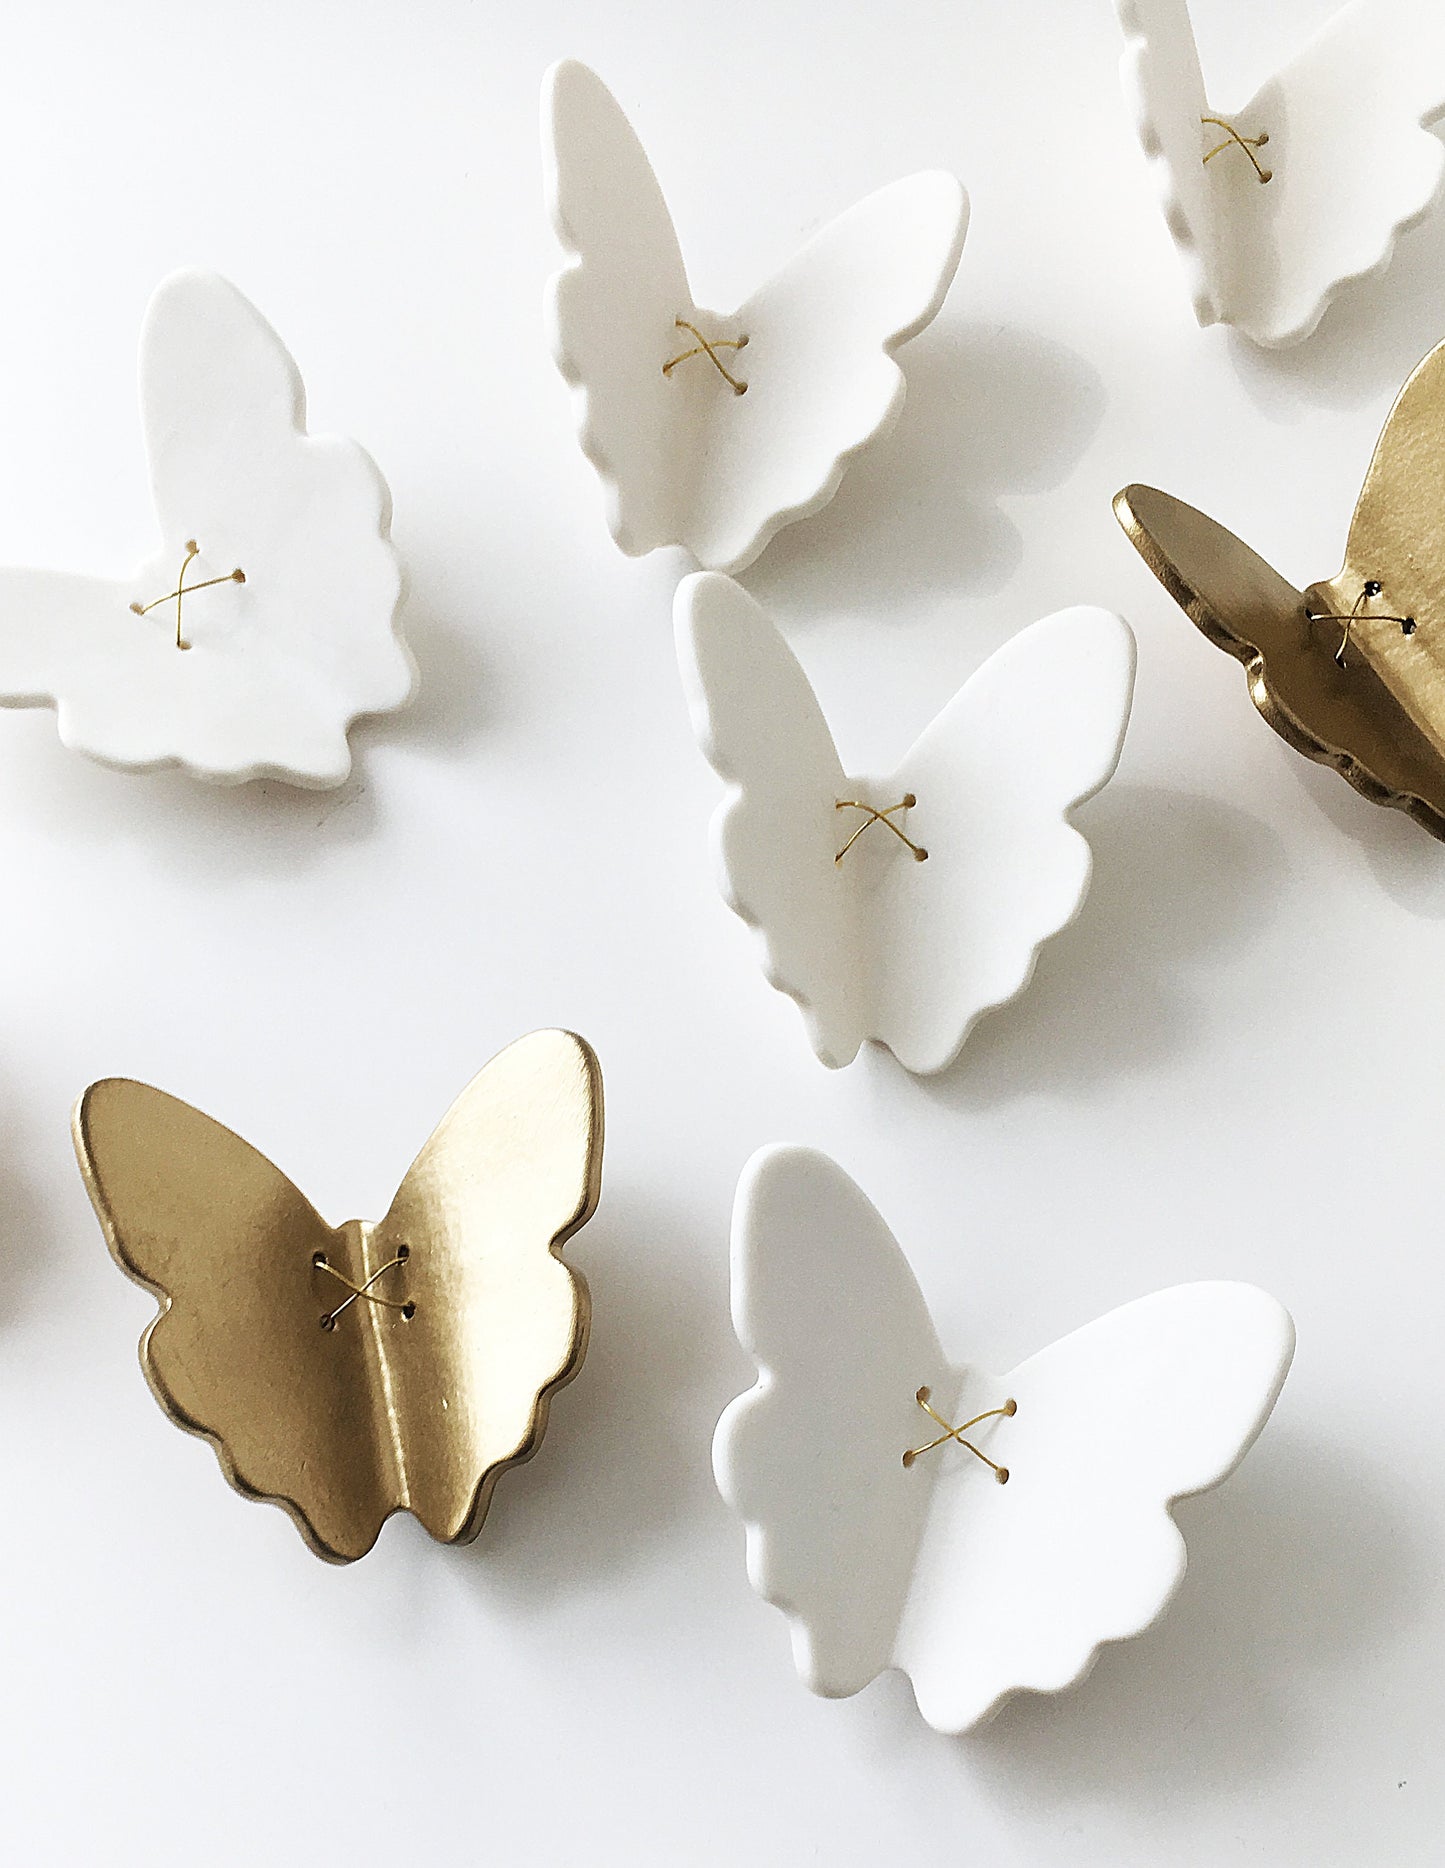 CUSTOM ARTWORK Multi Listing - 3D Butterfly wall art White porcelain handmade ceramic gold finish brass wire butterflies Original art